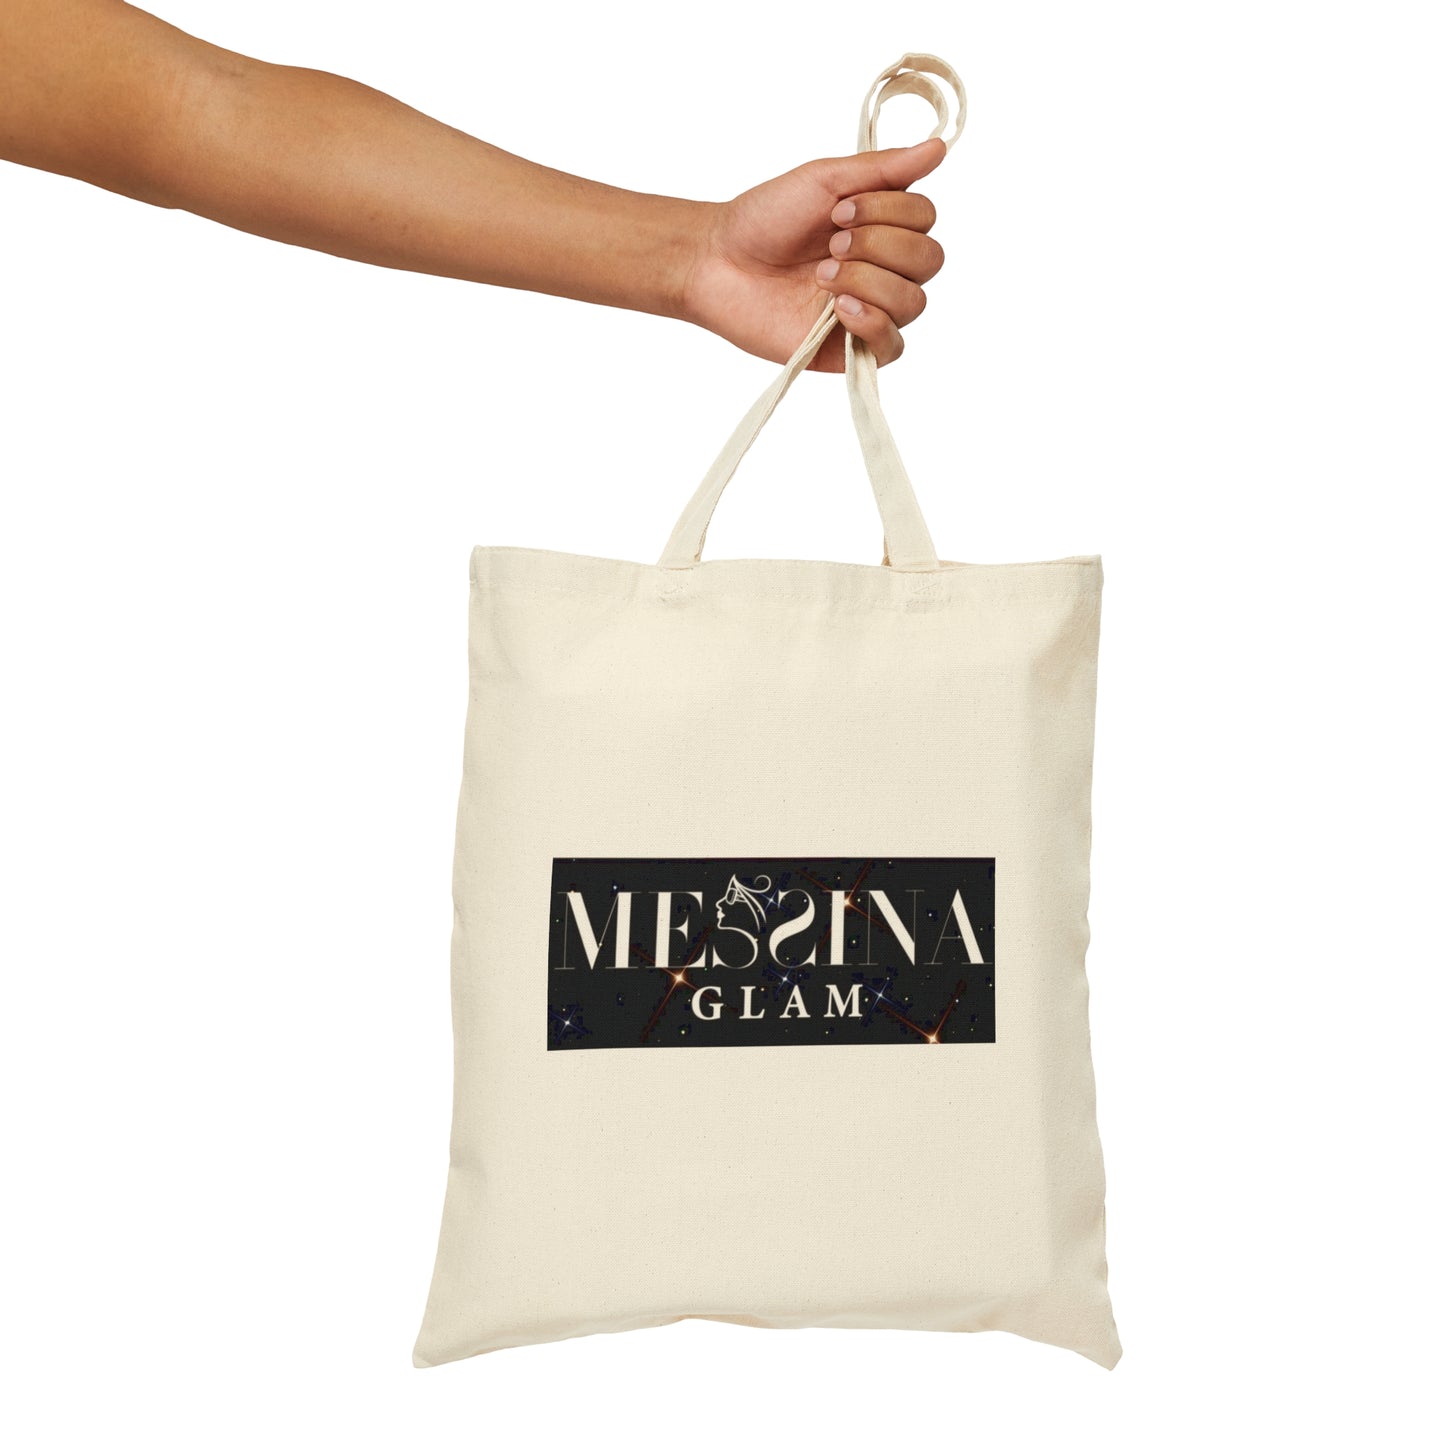 Messina glam Cotton Canvas Tote Bag